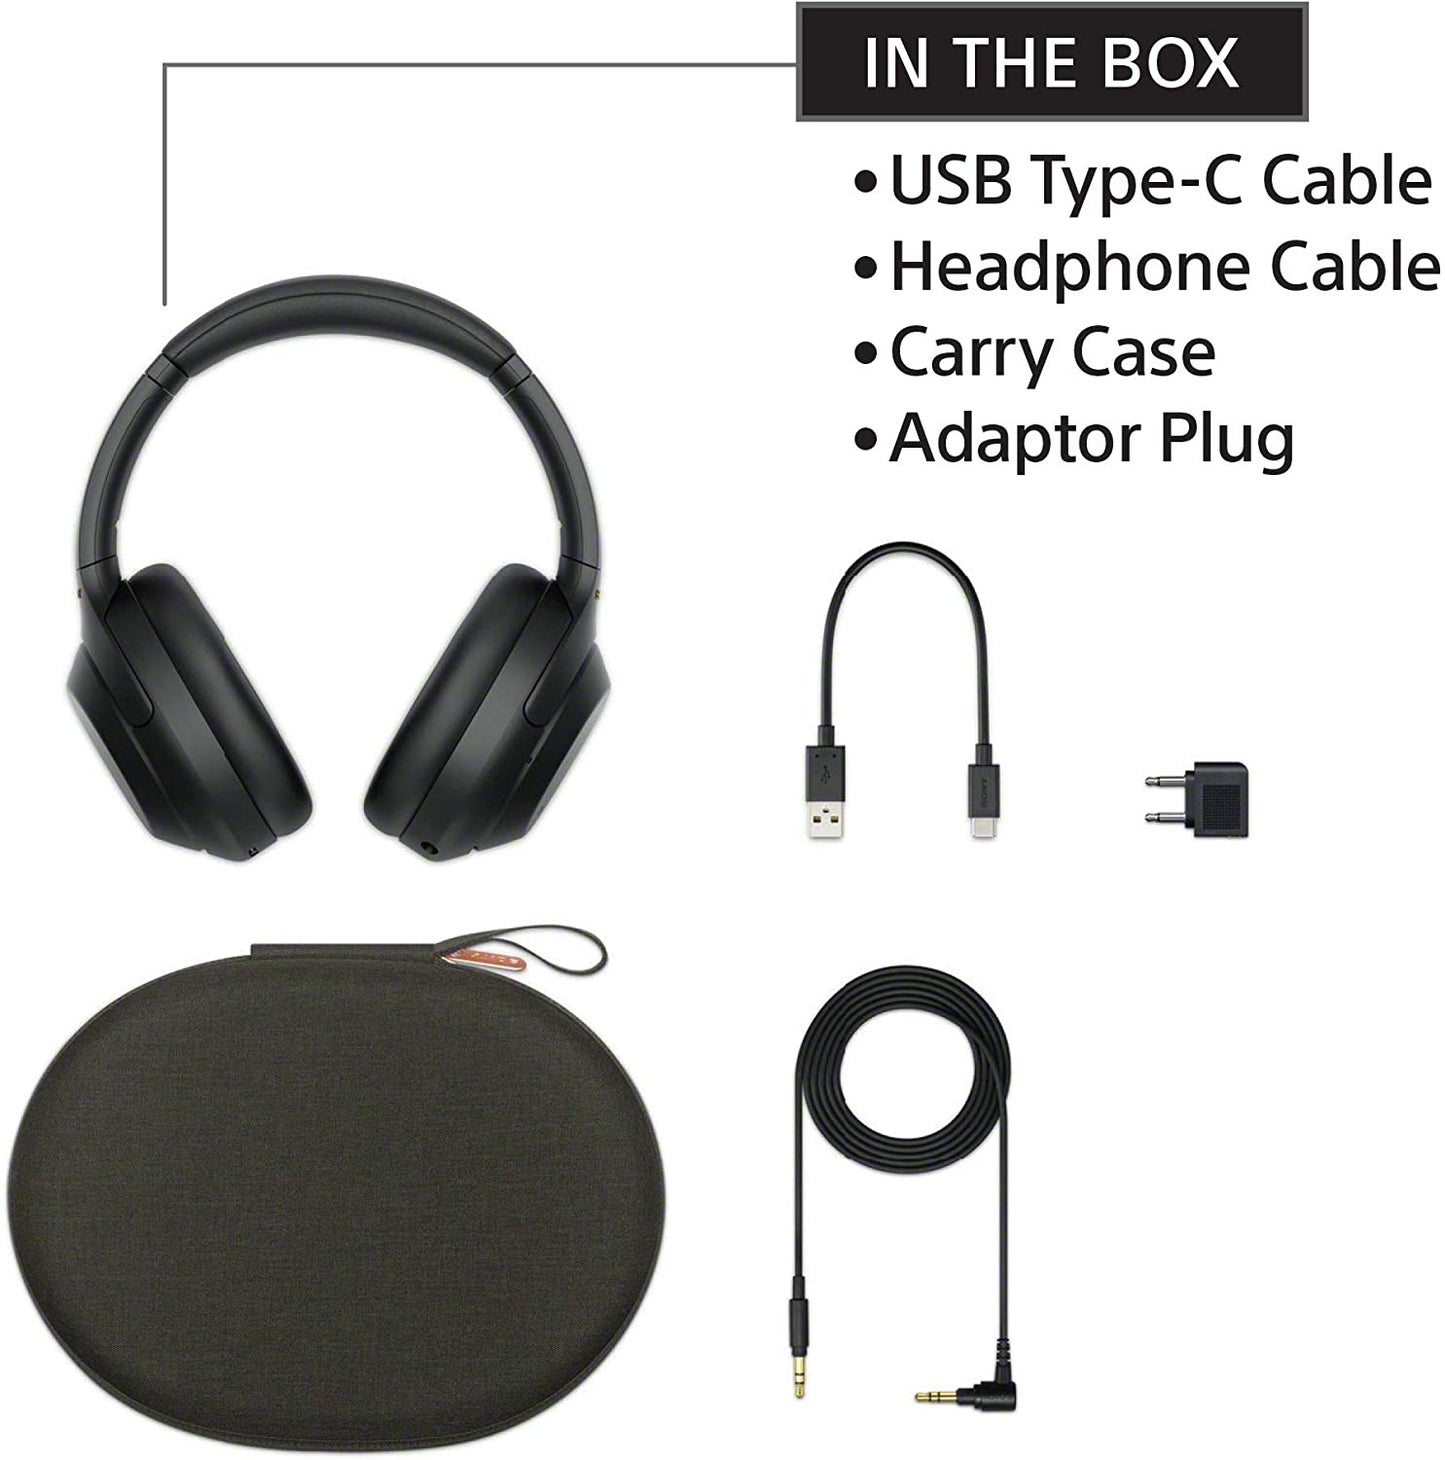 Sony WH-1000XM4 Wireless Noise Canceling Overhead Headphones - Black